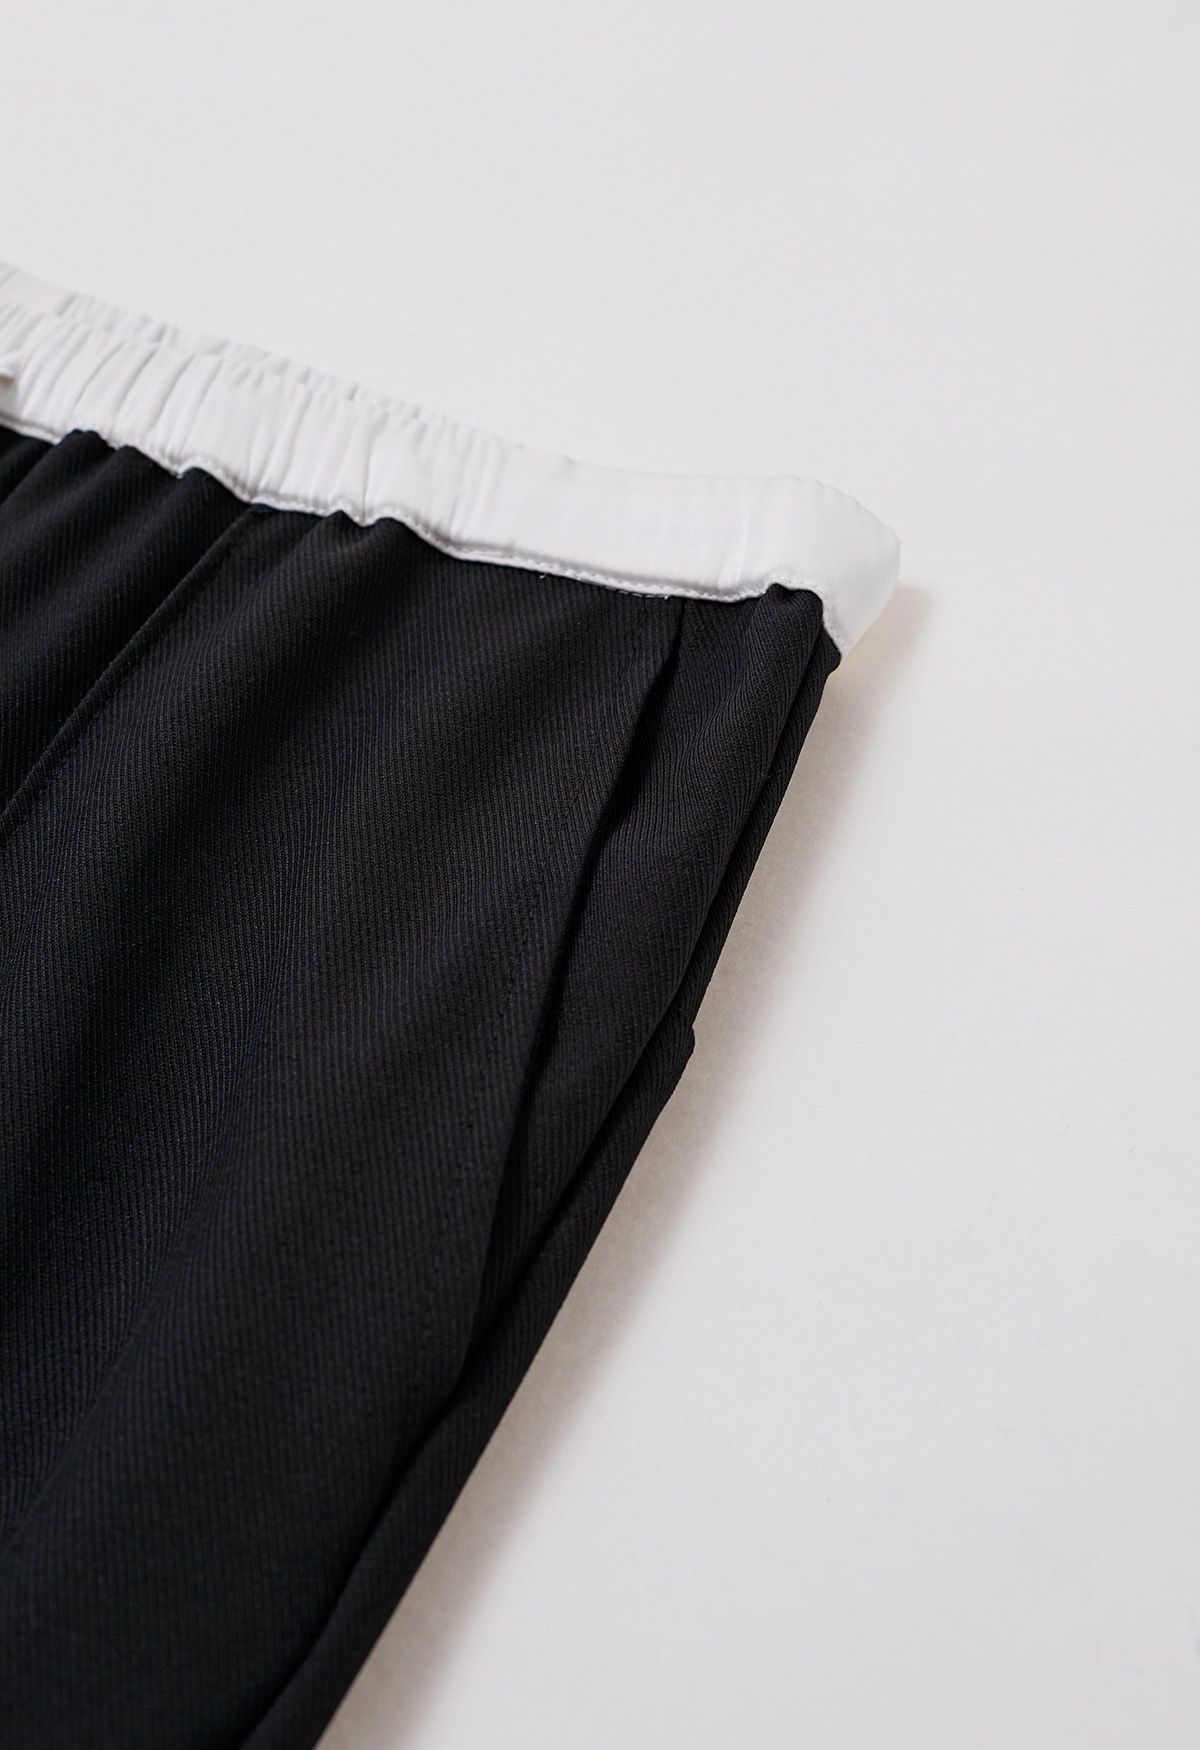 Contrast Waist Seam Detail Straight-Leg Pants in Black